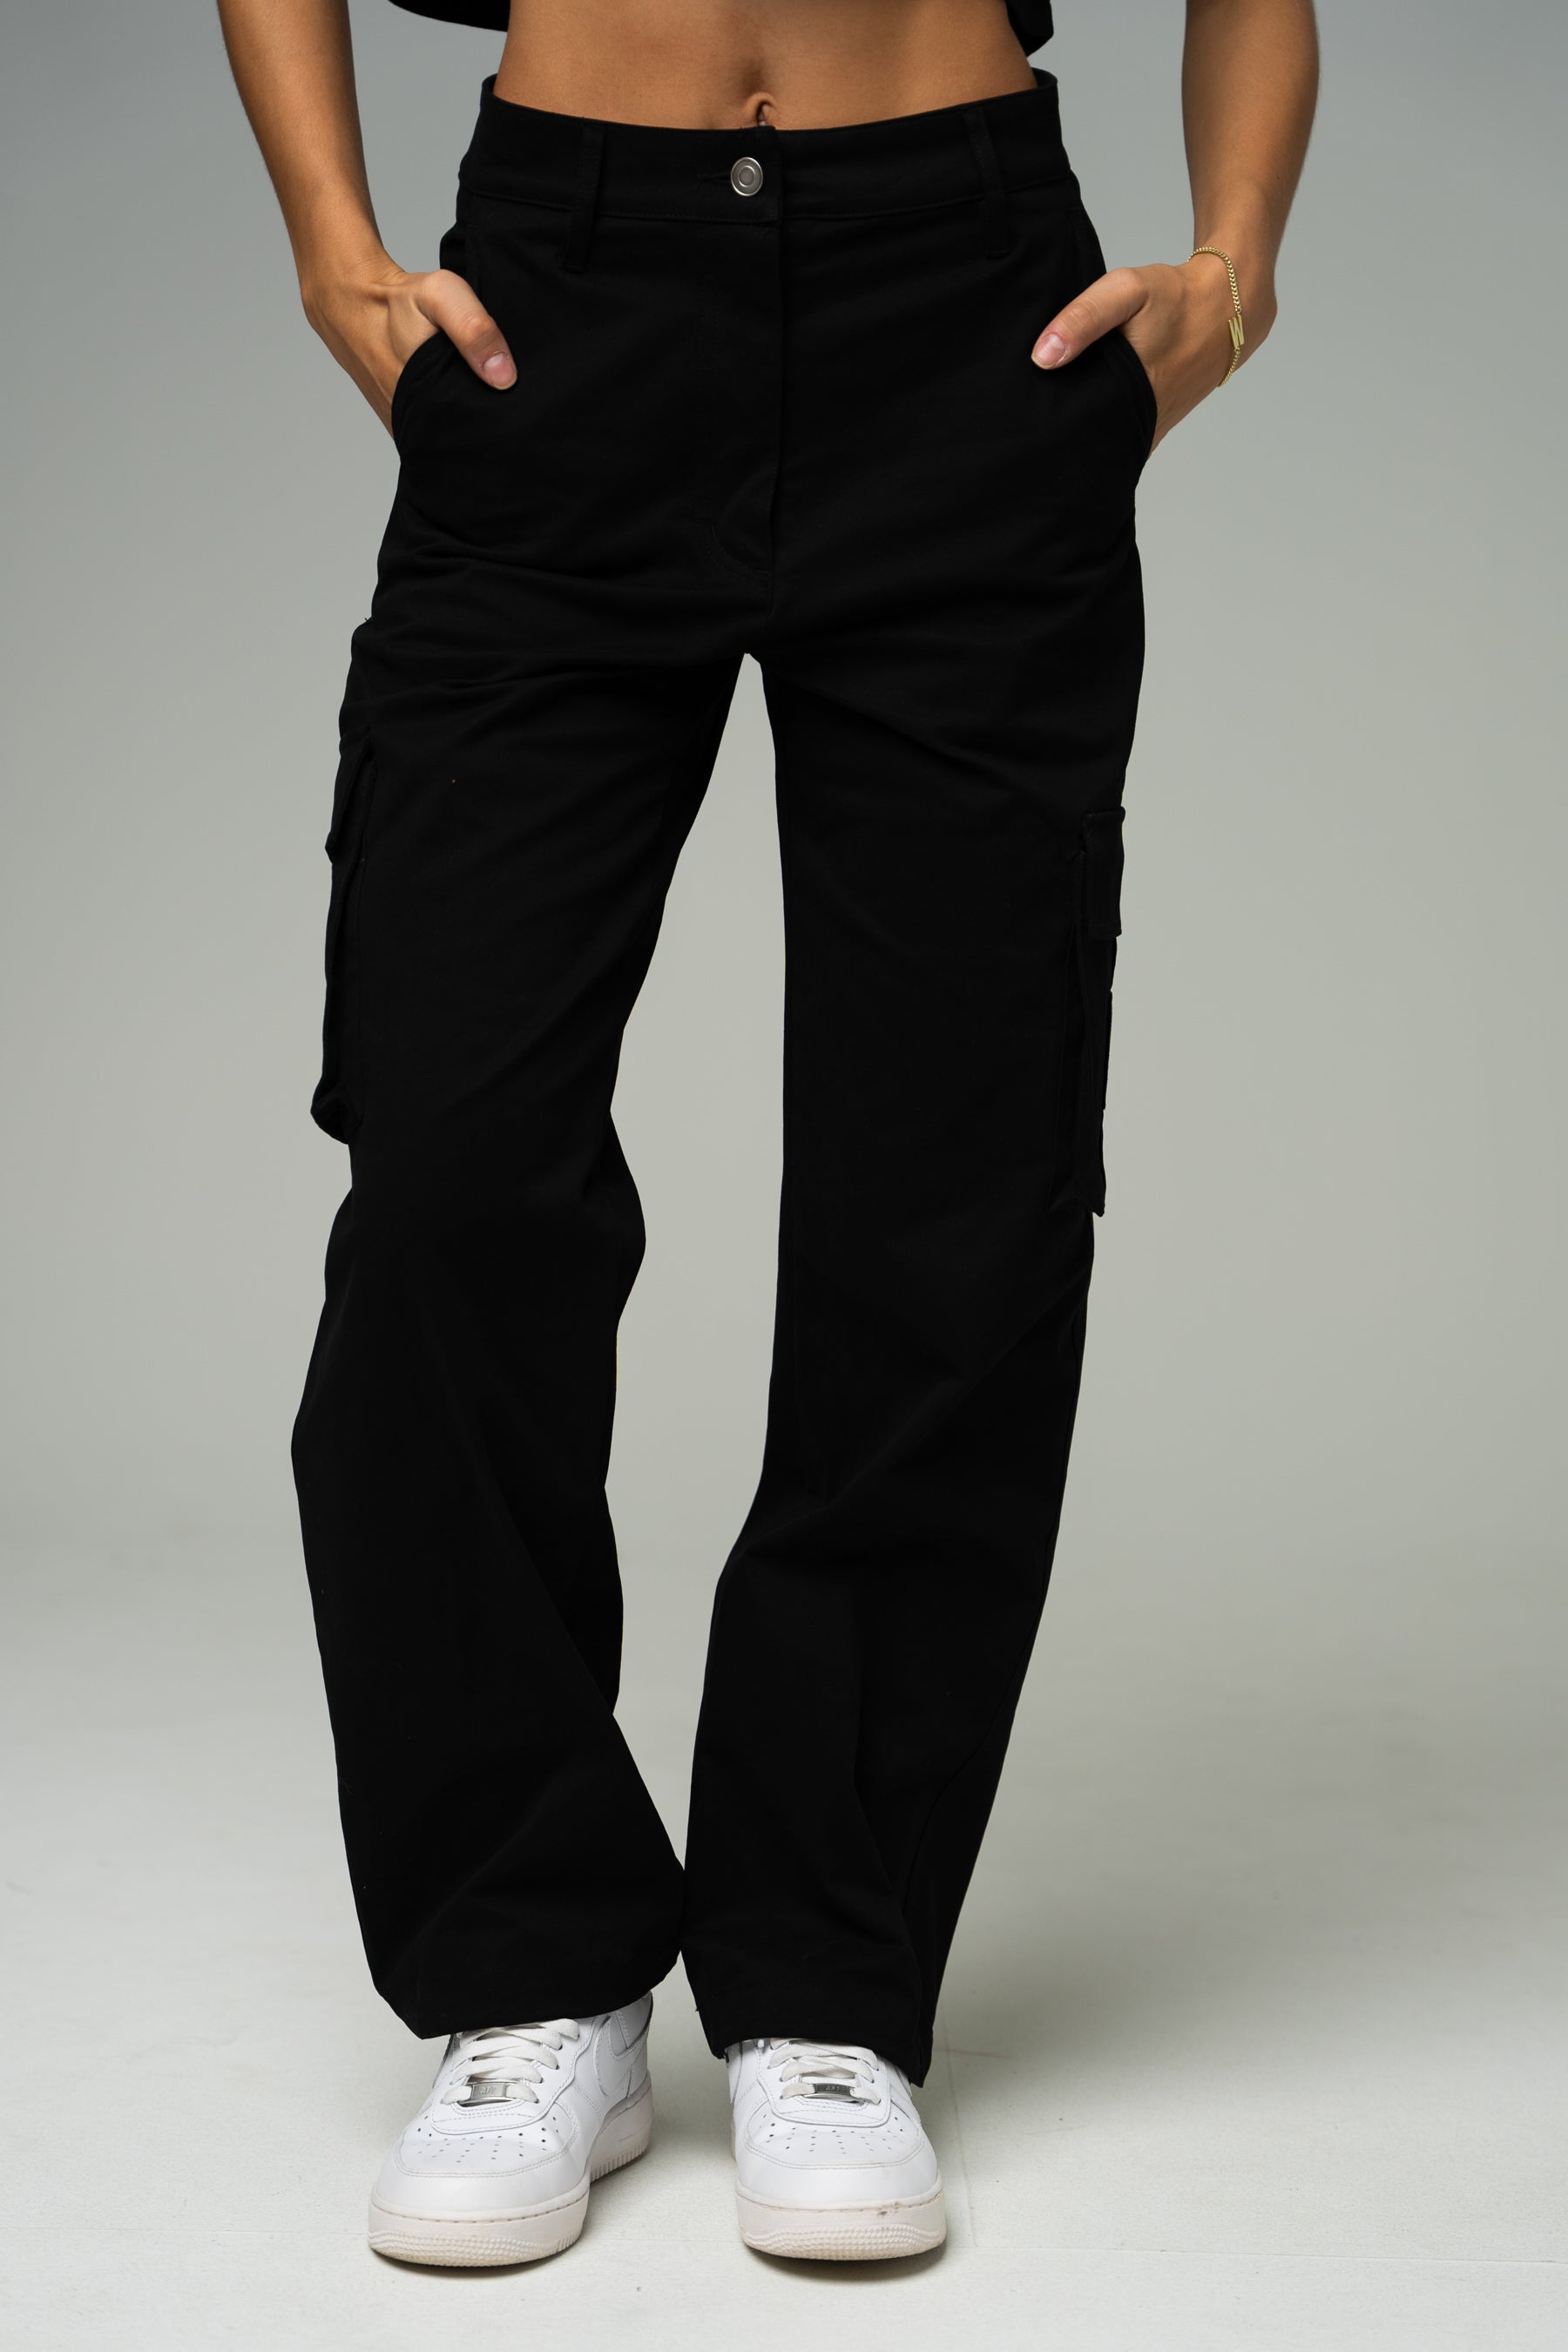 Kappa Womens Cargo Pants Black Chinos Pockets Stretch Gold Logo Size Medium  HTF